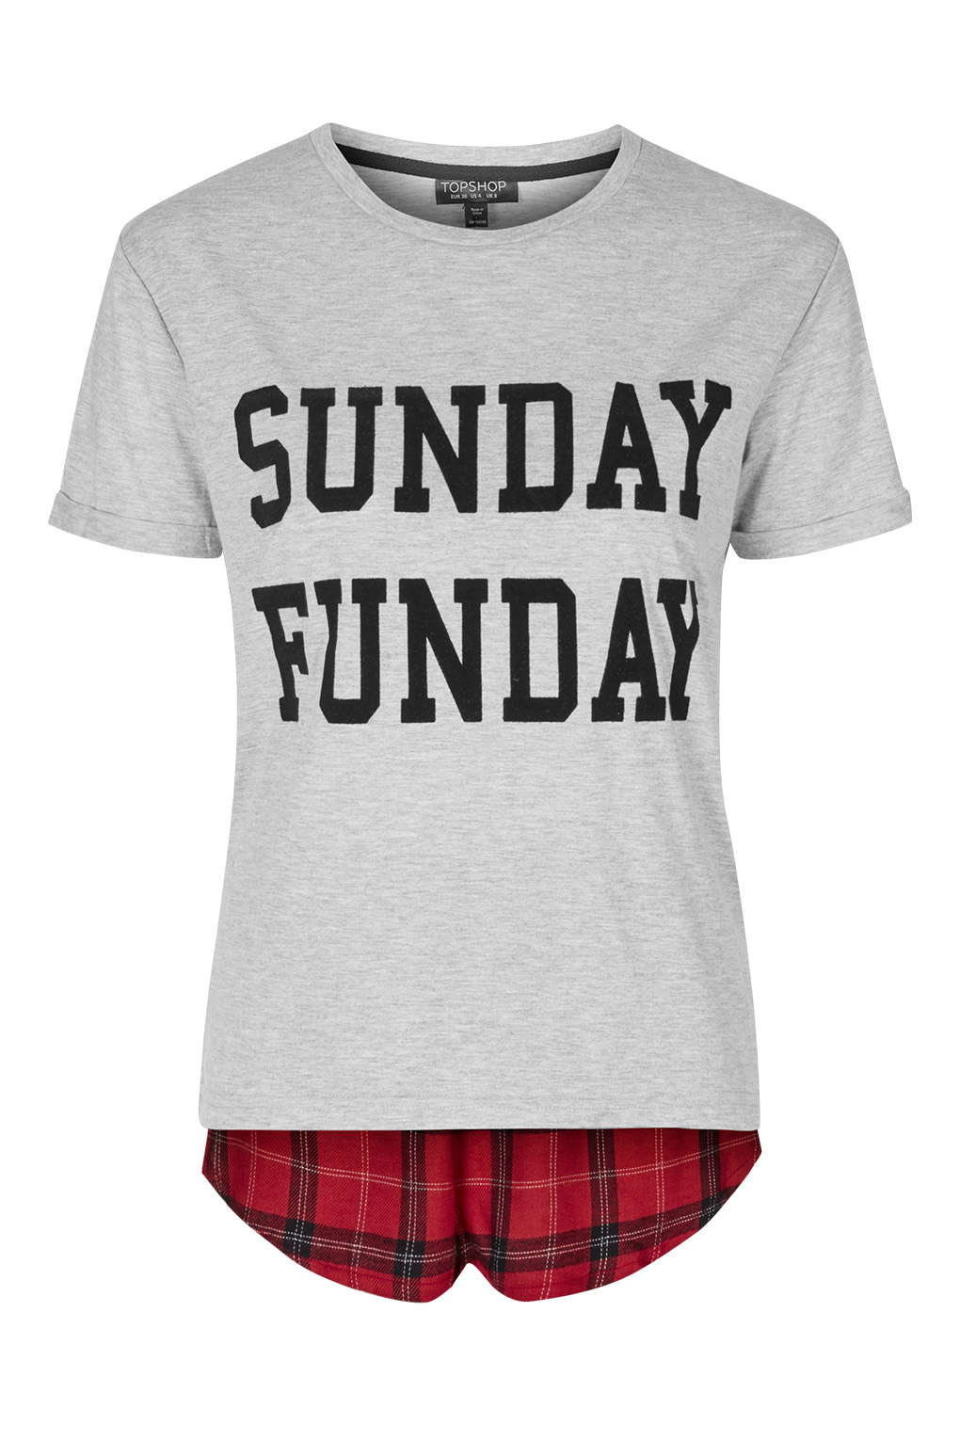 Sunday Funday Pyjama Set, $40 at <a href="http://us.topshop.com/en/tsus/product/clothing-70483/sleepwear-2313446/pajama-sets-4636243/sunday-funday-pyjama-set-4939659?bi=0&amp;ps=20" target="_blank">Topshop</a>